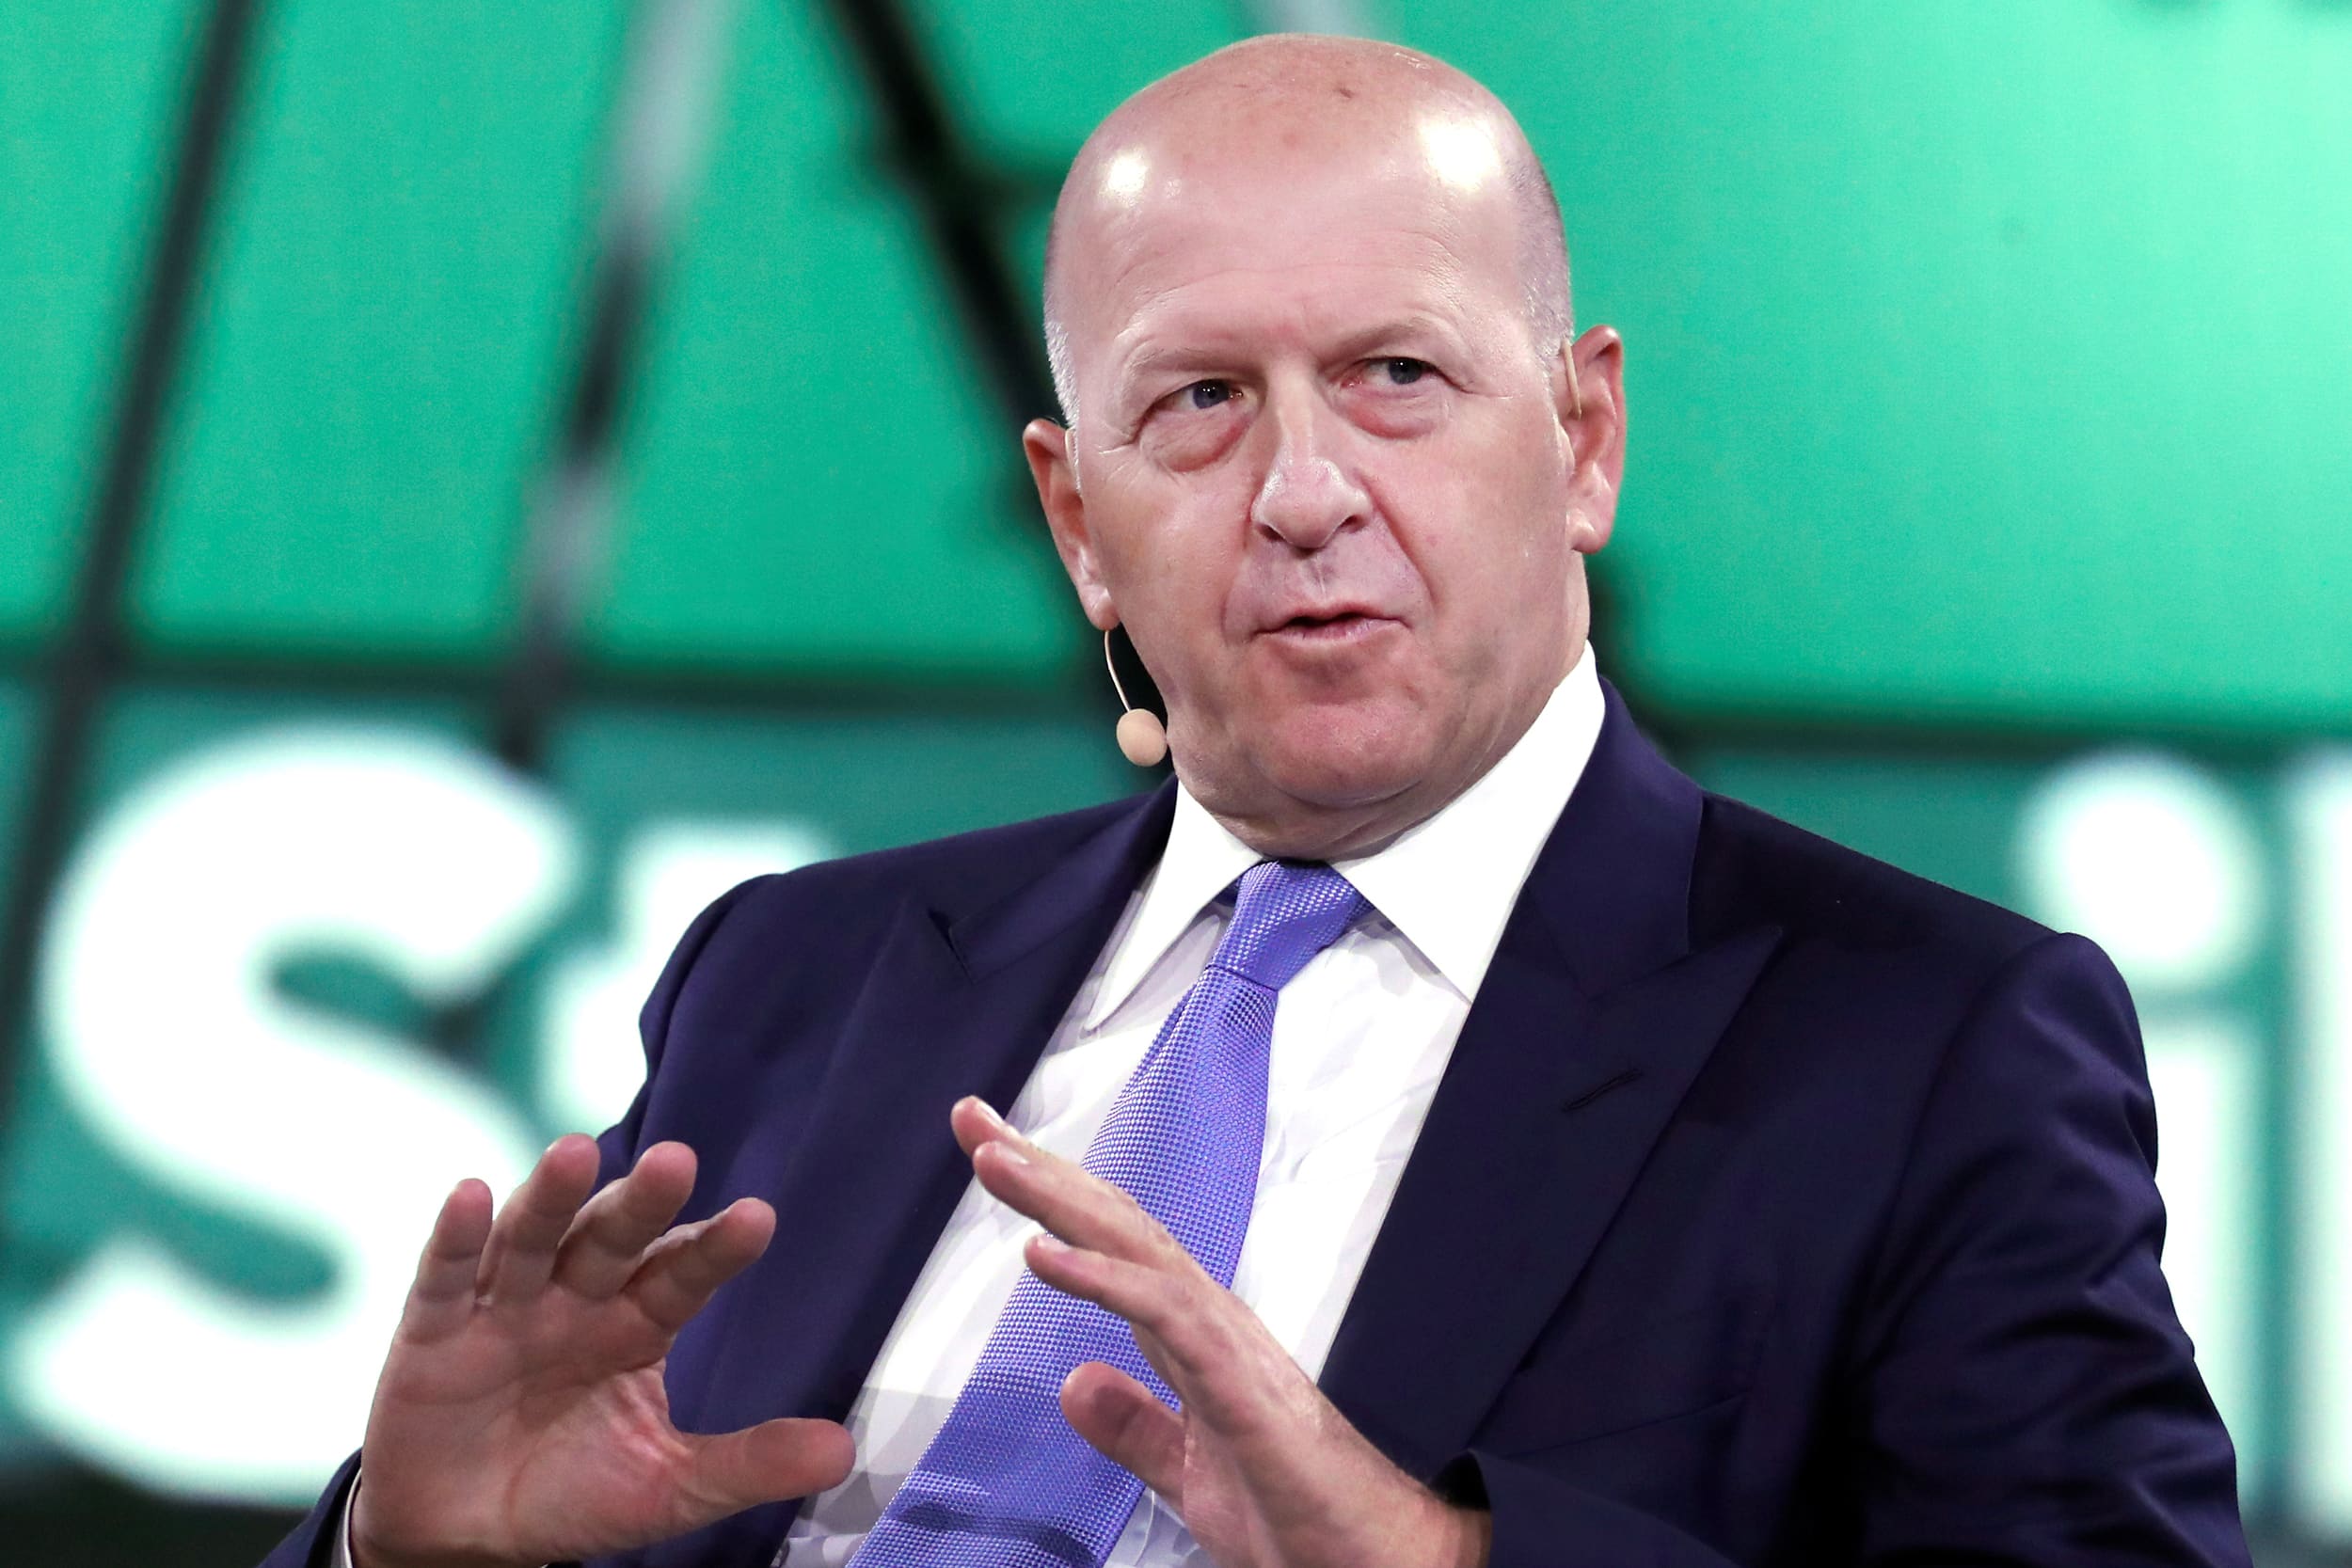 Goldman CEO addresses junior bankers’ complaints after research goes viral